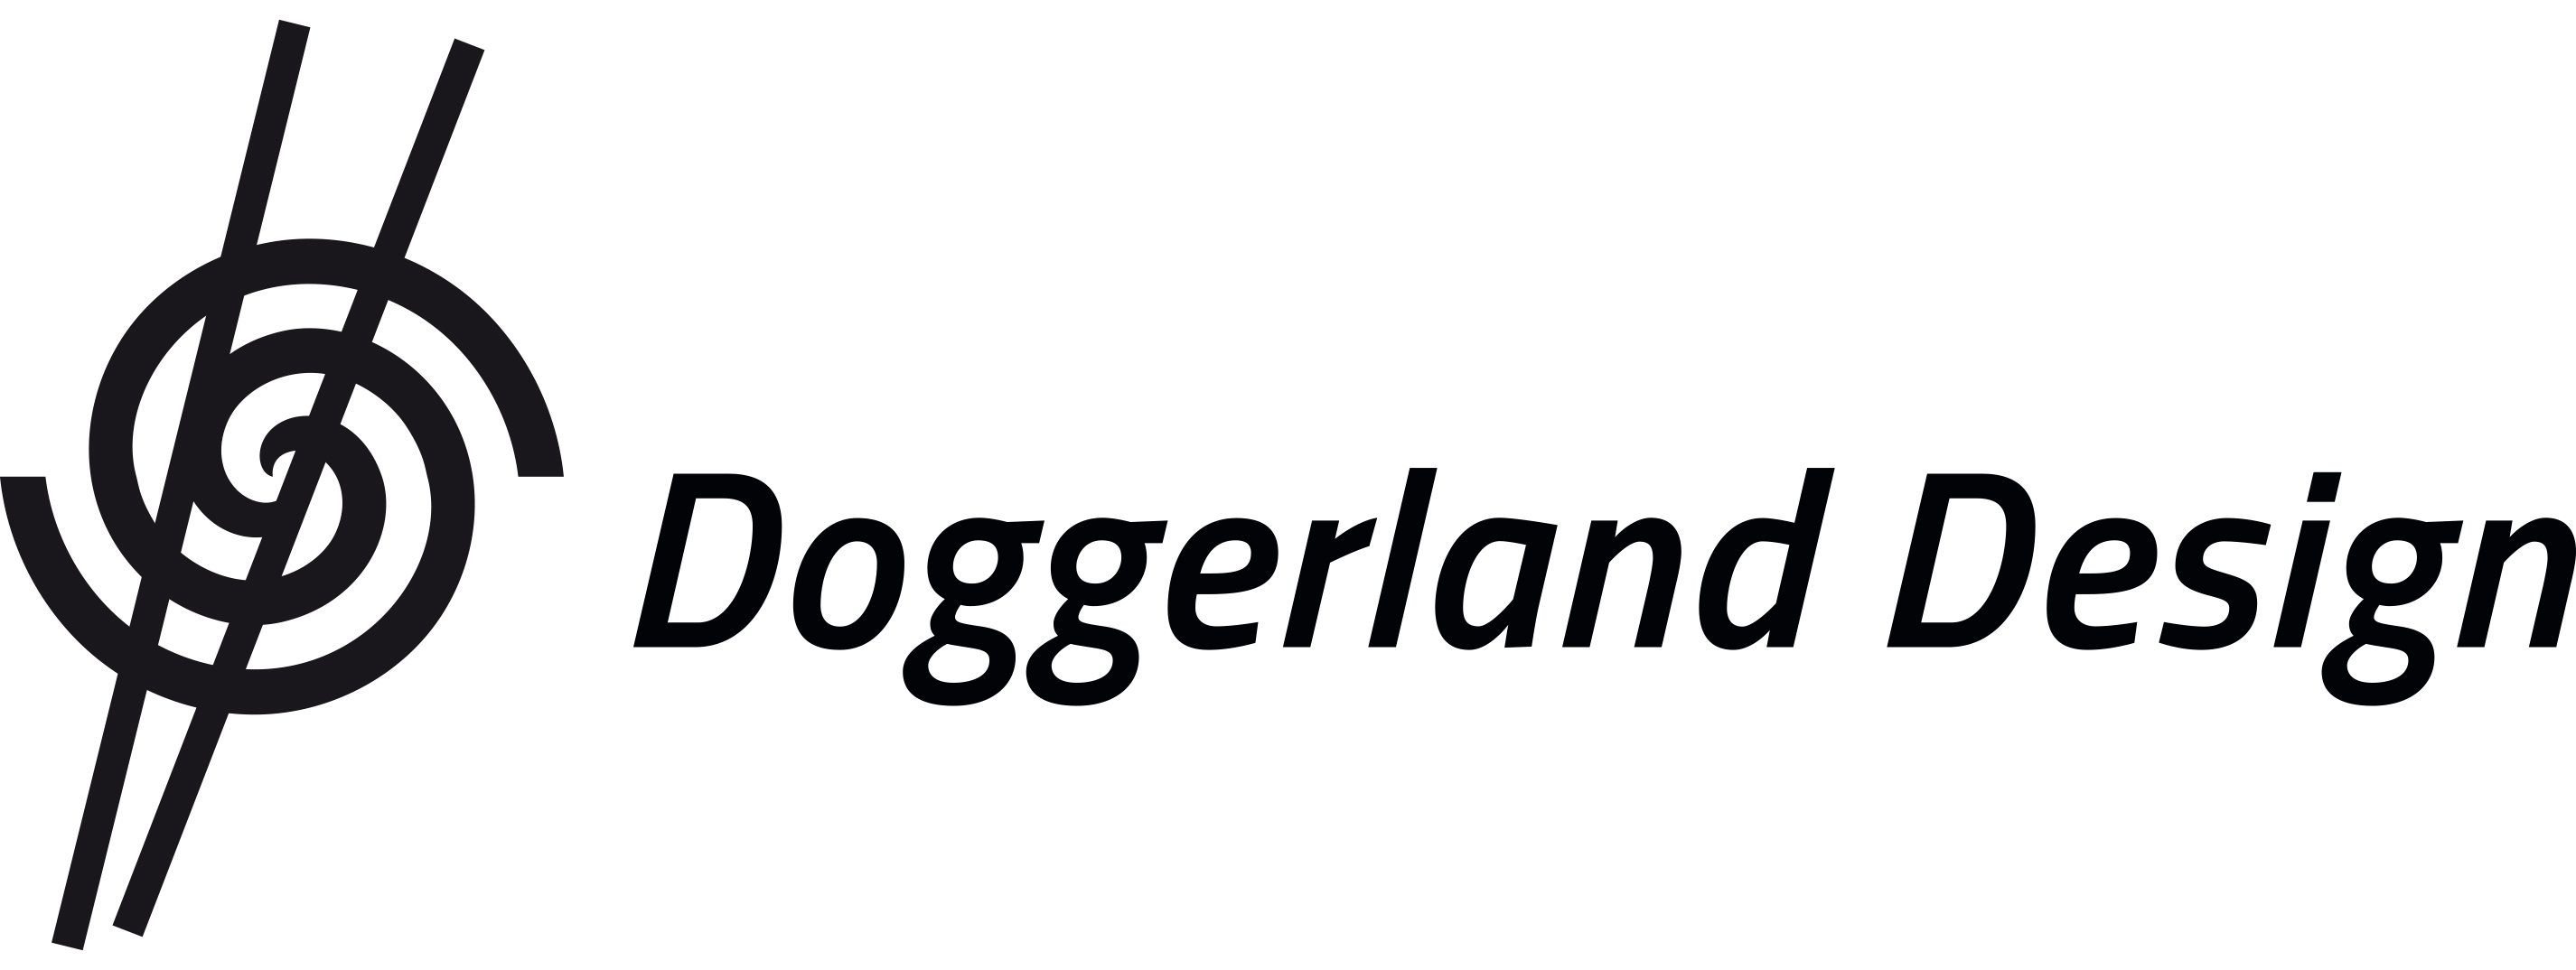 Blog om strik - Doggerland Design og garnkits.dk • Strik, hækling, design, kits, garn